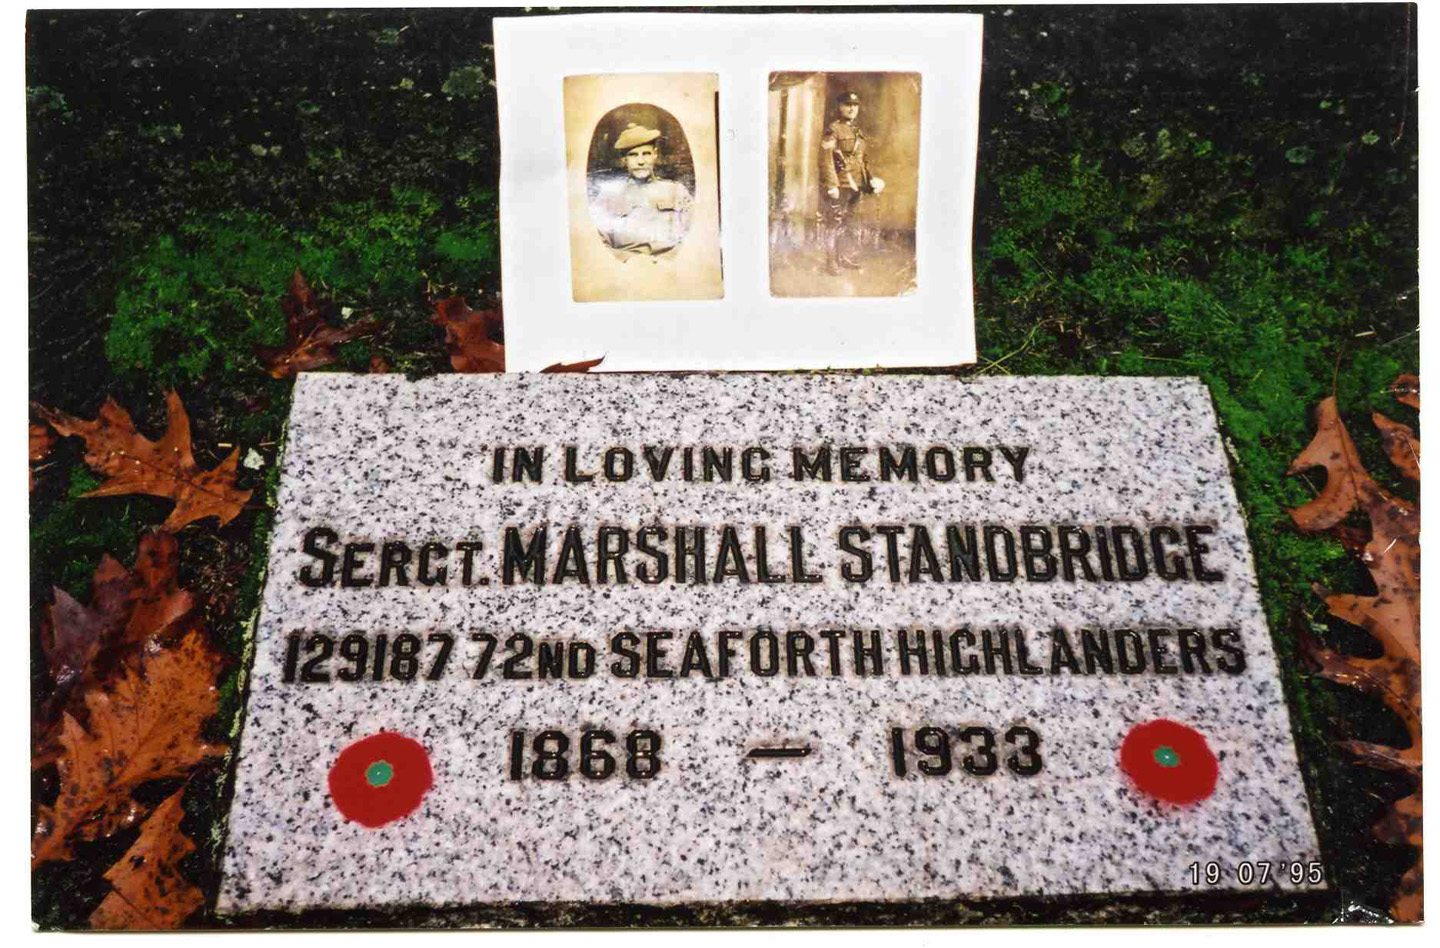 grandfather-marshall-standbridge-5